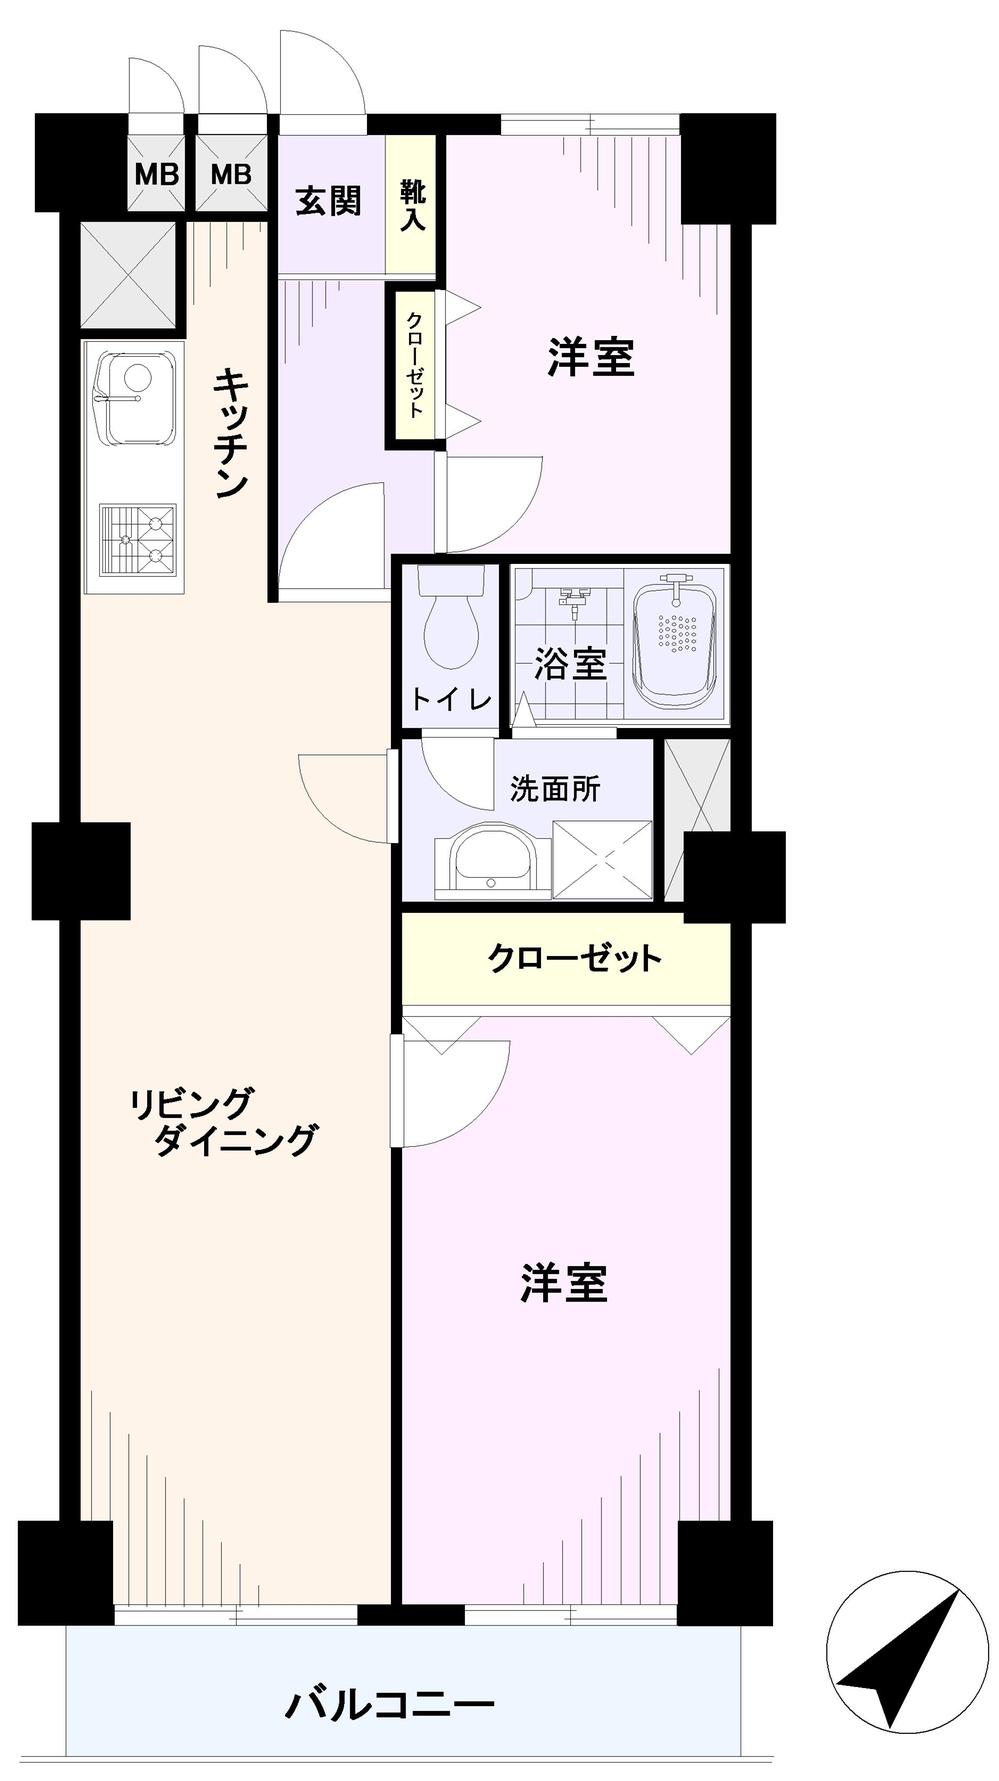 Floor plan. 2LDK, Price 22,800,000 yen, Footprint 65 sq m , Balcony area 7.73 sq m